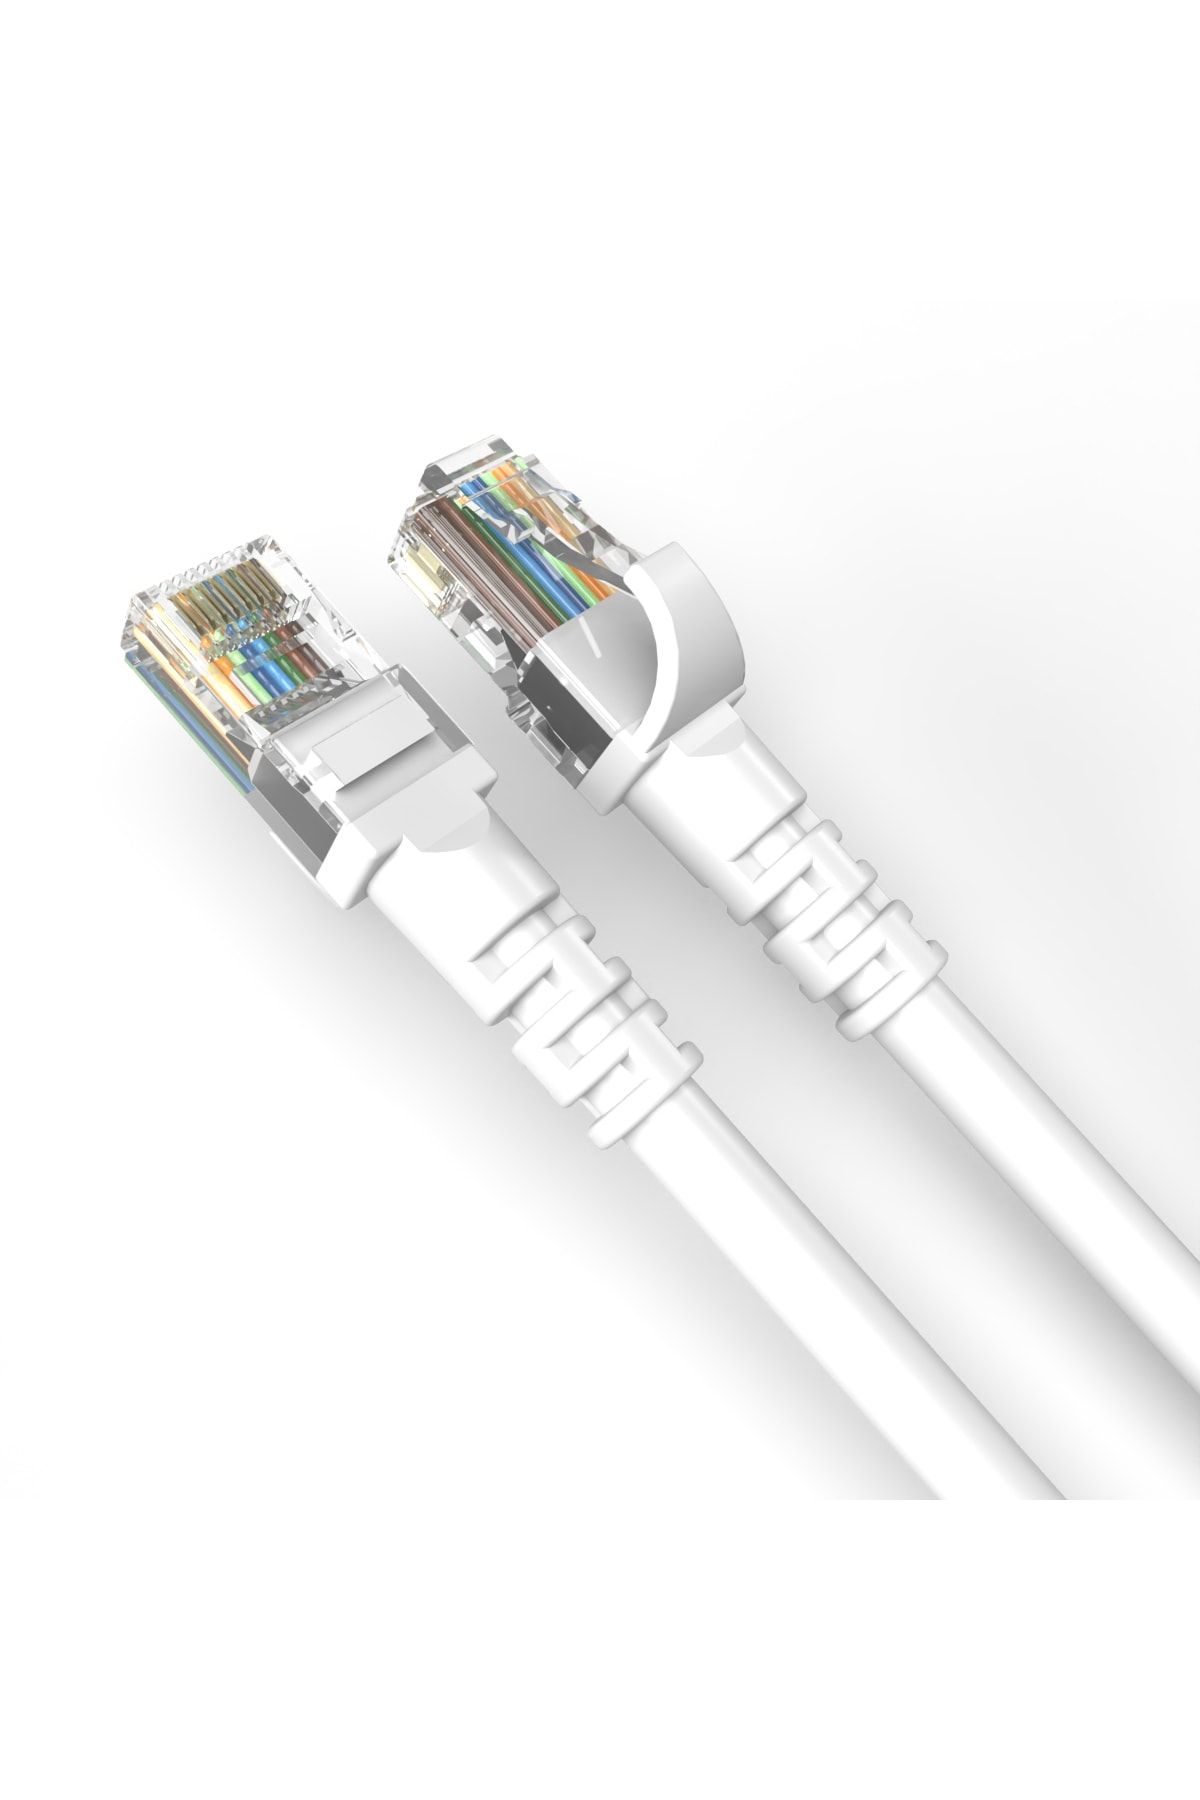 DERKAB 30 Cm-santimetre Cat6 Network-ağ-ethernet Kablosu 10'lu Paket Beyaz